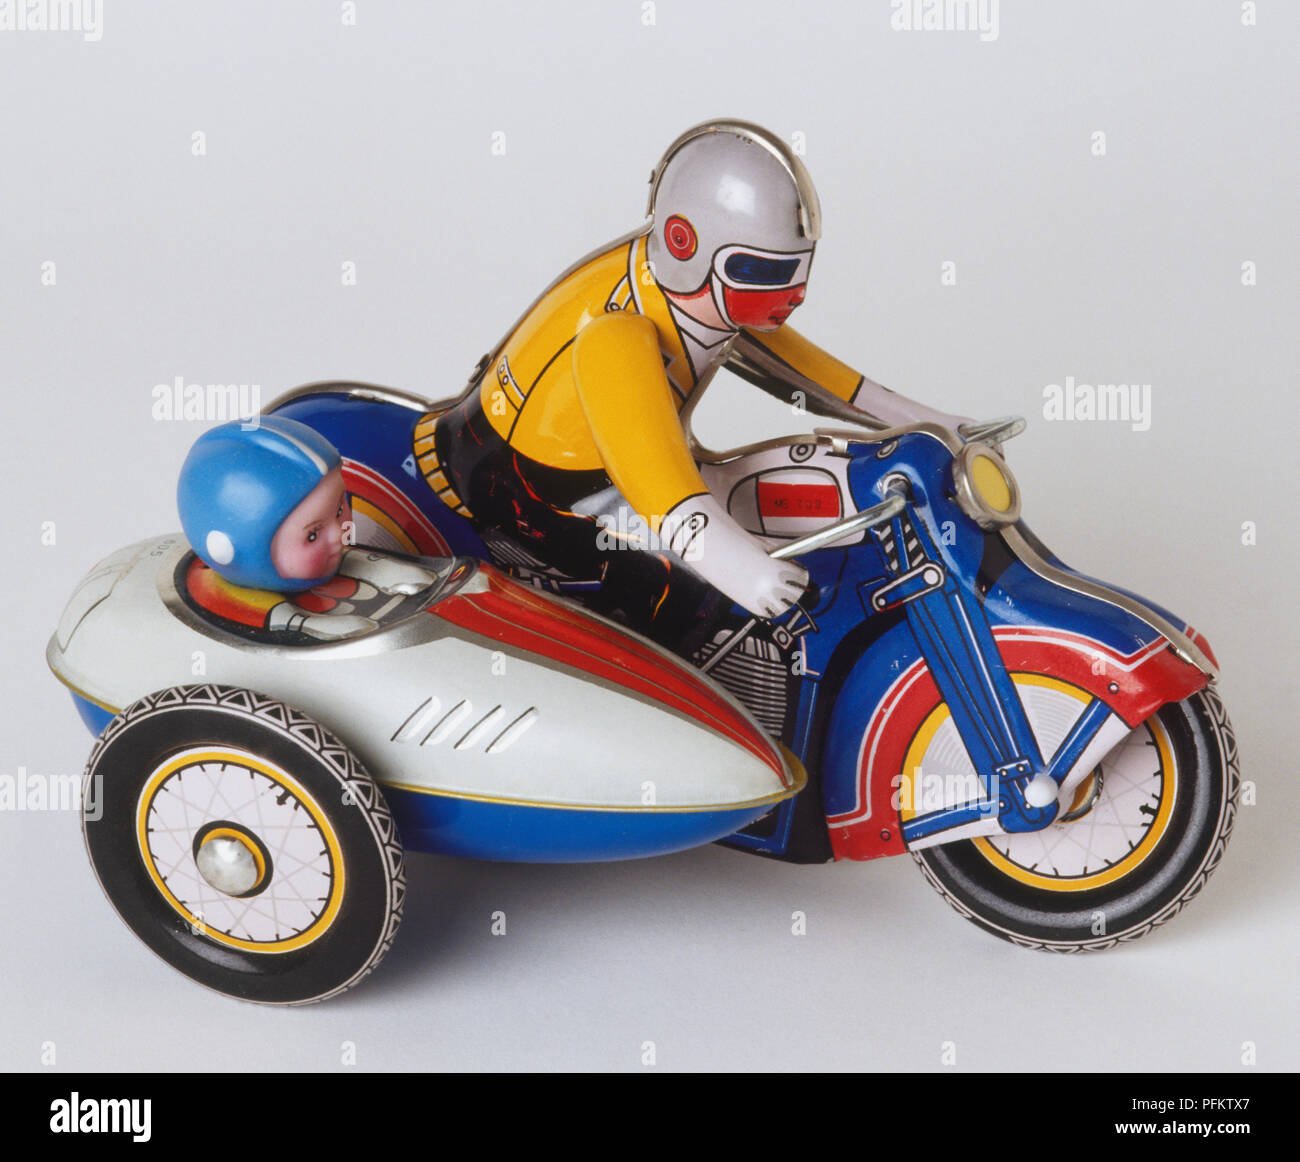 Miniature toy man on a motorbike Stock Photo